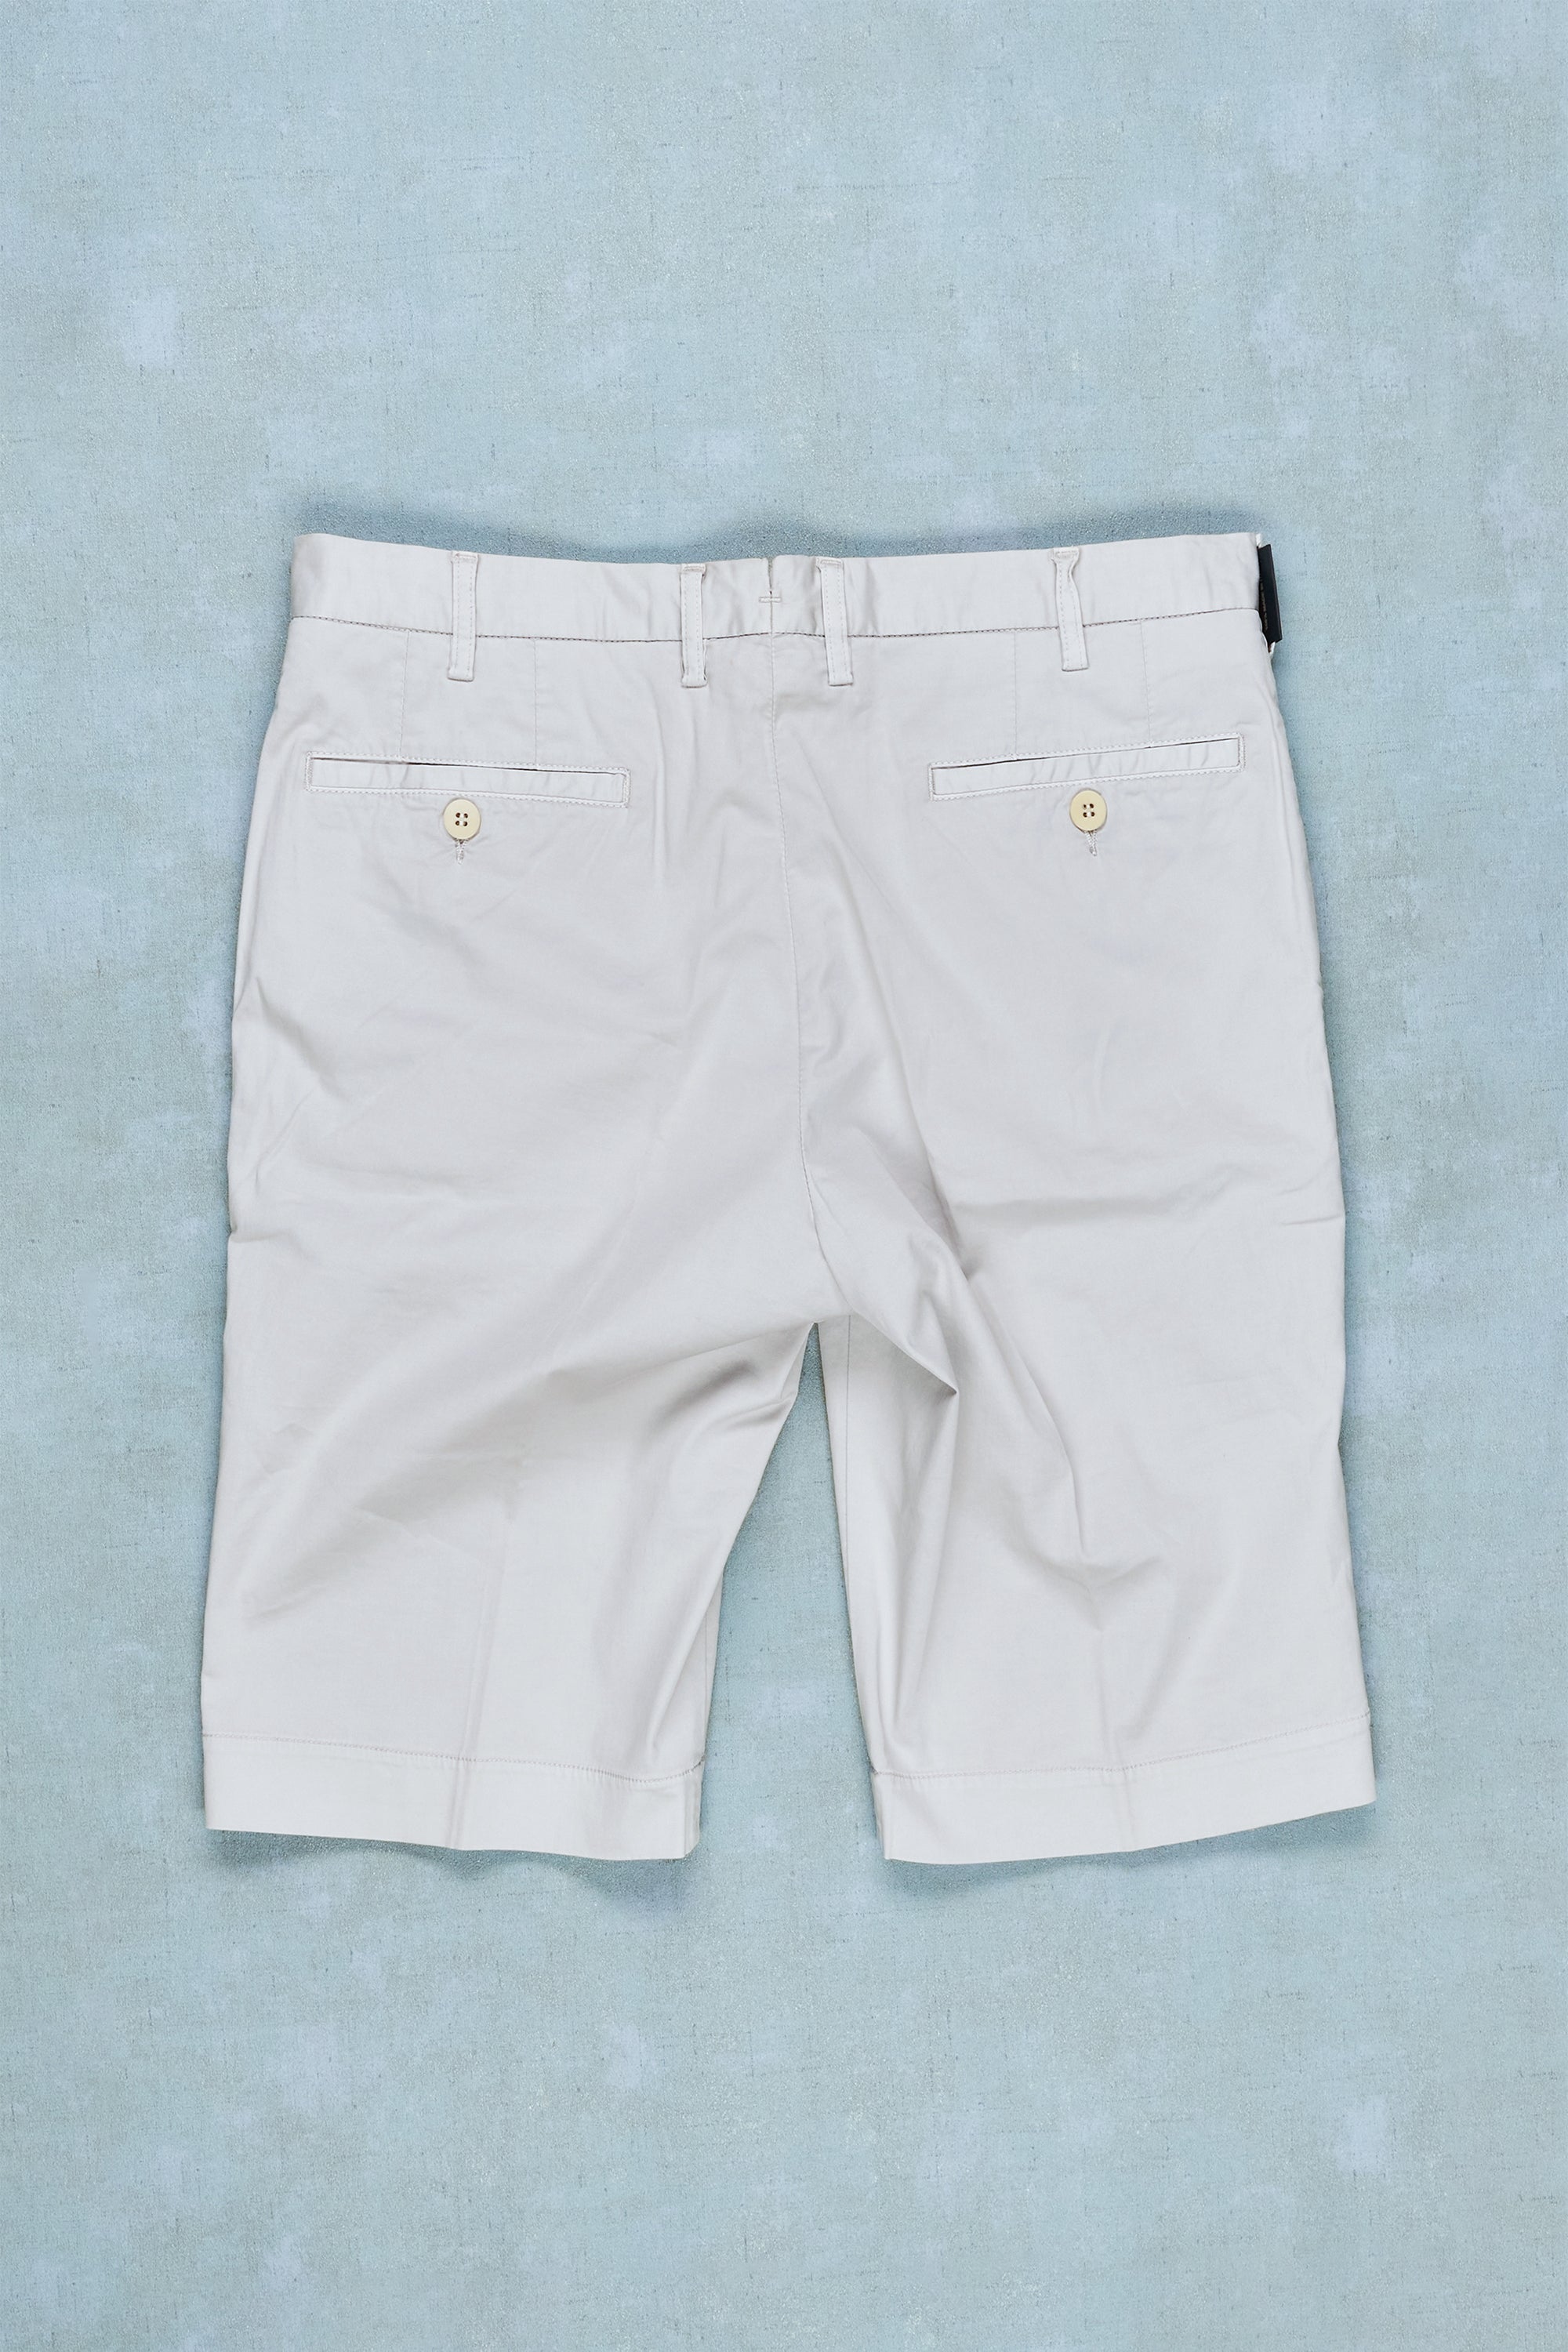 Rota	BE290/2 Light Grey Cotton Shorts